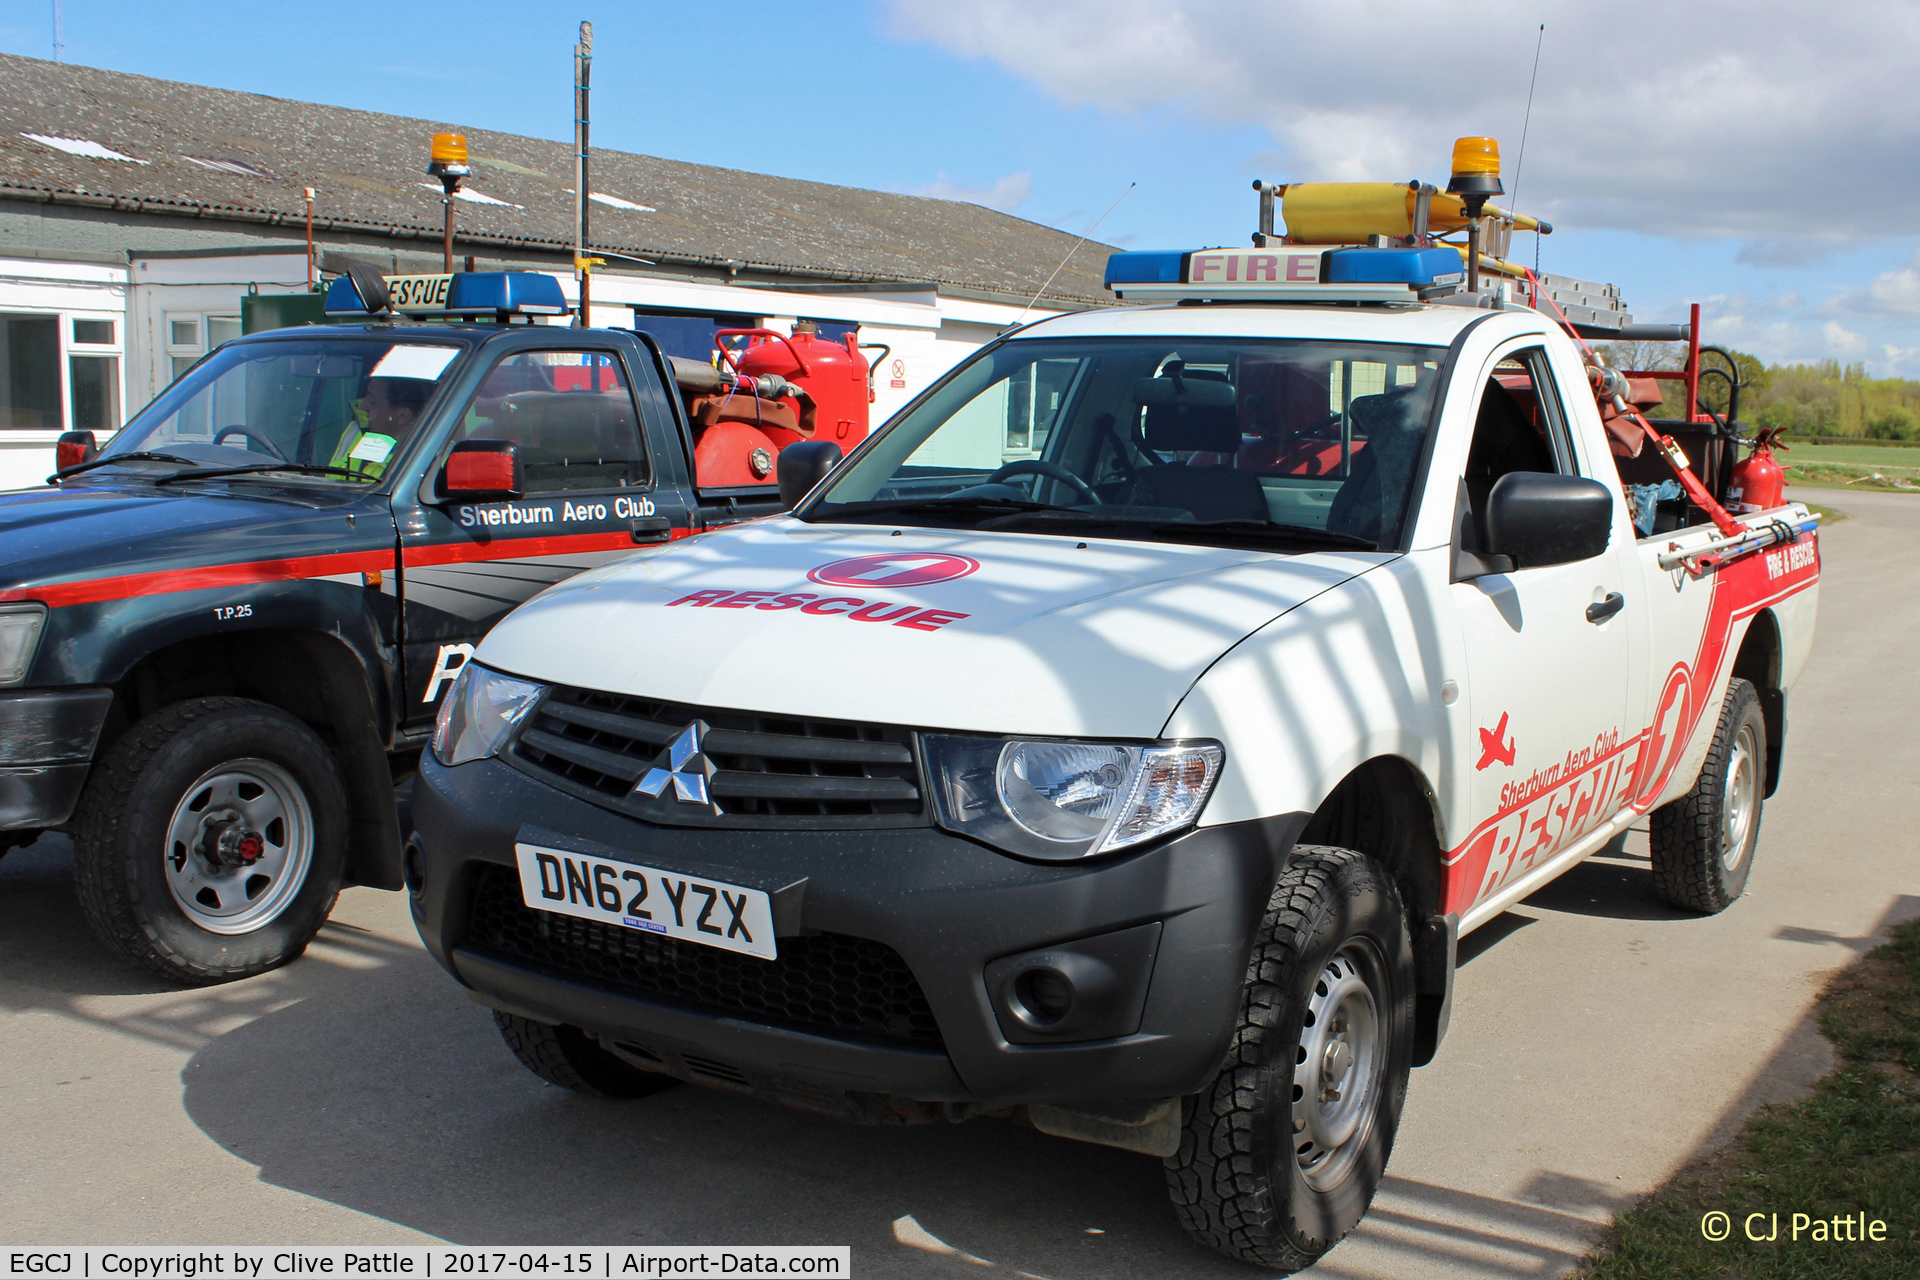 Sherburn-in-Elmet Airfield Airport, Sherburn-in-Elmet, England United Kingdom (EGCJ) - Fire Rescue vehicles at EGCJ